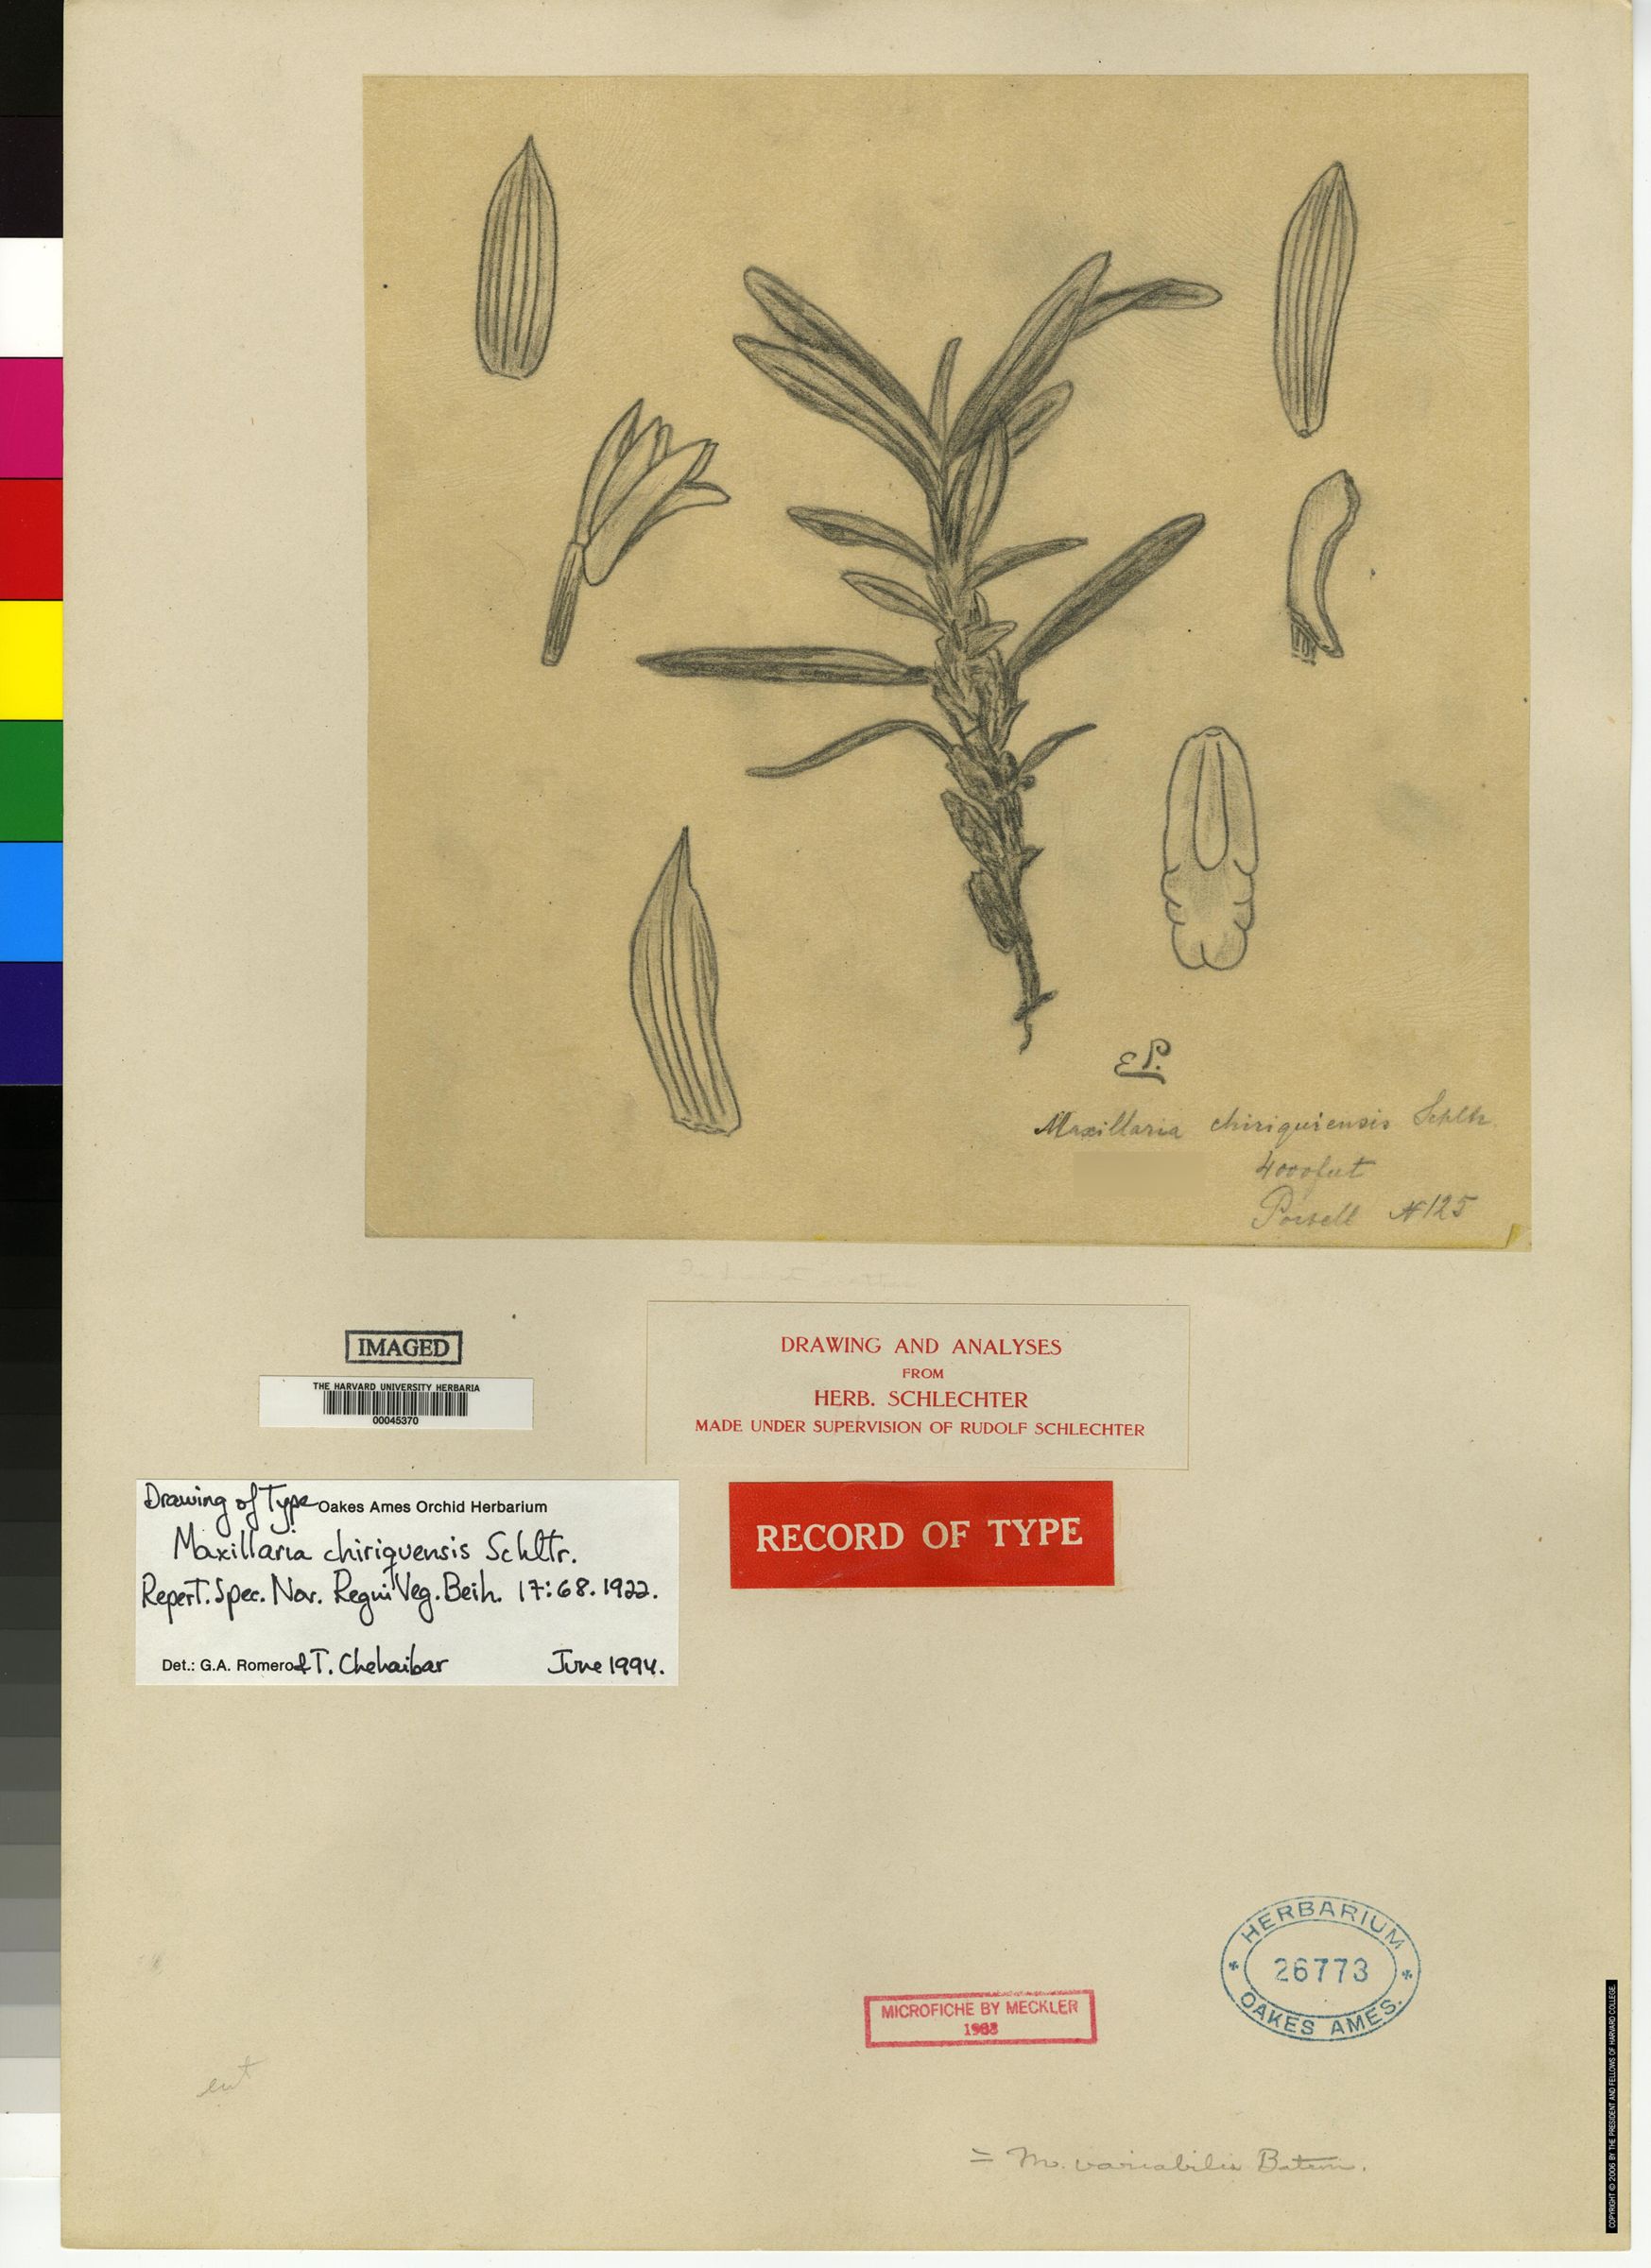 Maxillaria variabilis image